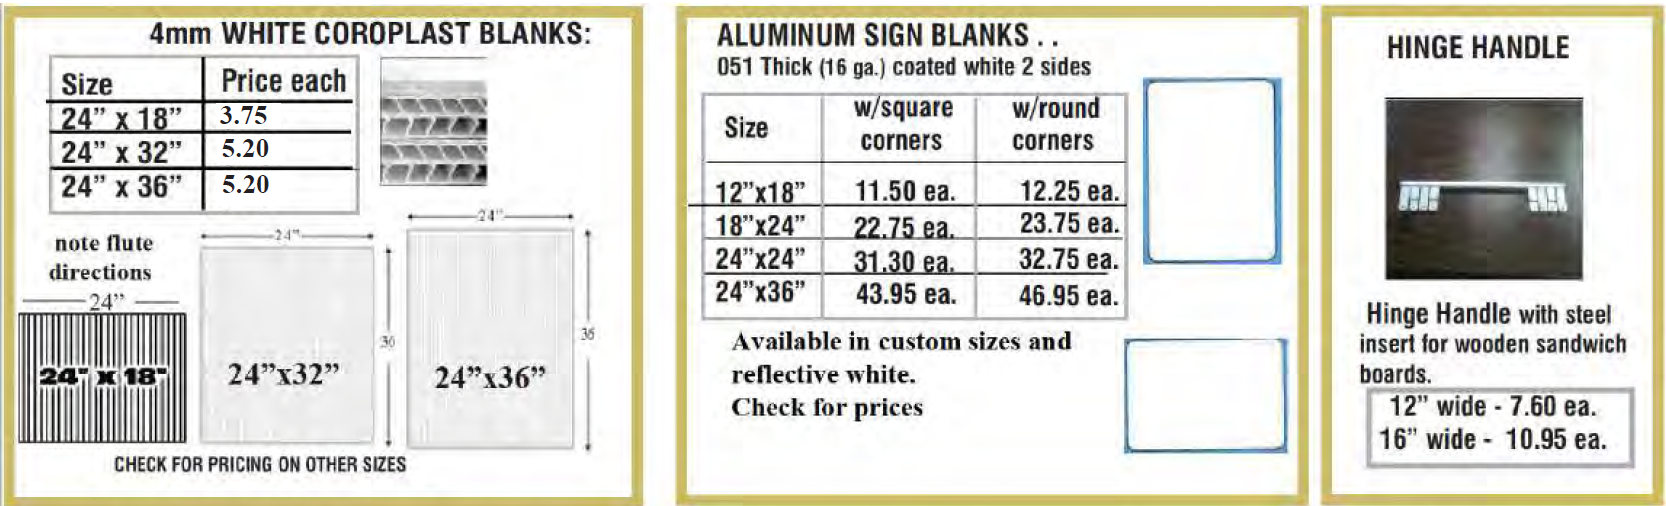 sign blanks dec 2021 - Sign Blanks - "Coroplast" - Hinge Handle - Aluminum Blanks